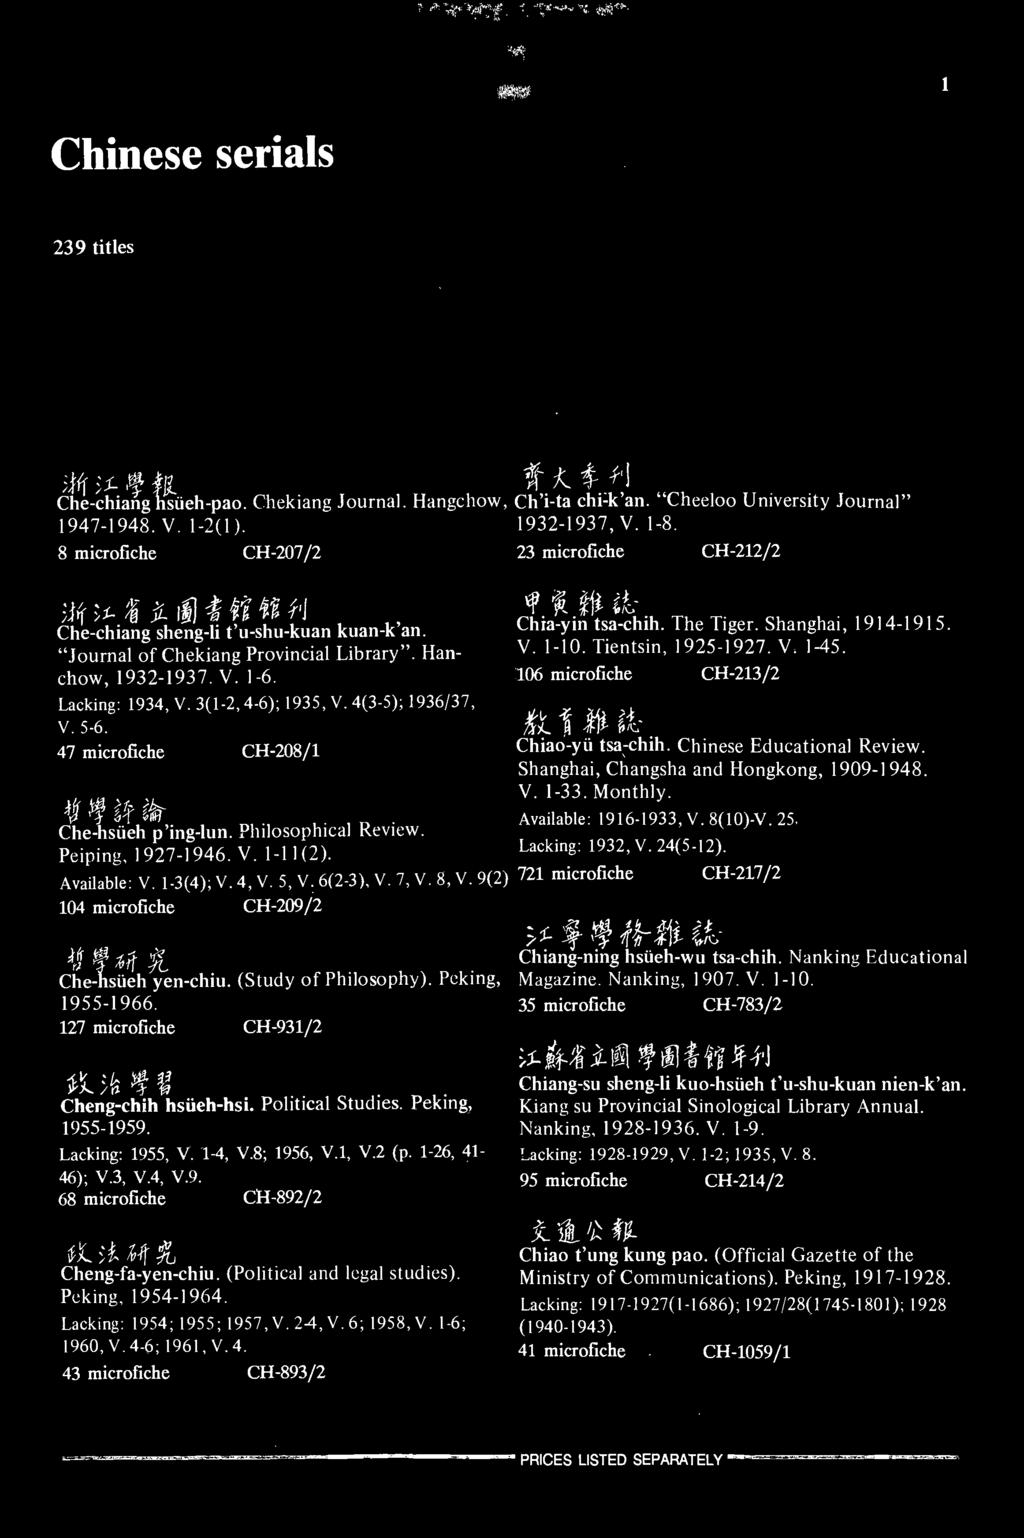 "Journal of Chekiang Provincial Library". Hanchow, 1932-1937. V. 1-6. 106 microfiche CH-213/2 Lacking: 1934, V. 3(1-2, 4-6); 1935, V. 4(3-5); 1936/37, V. 1-10. Tientsin, 1925-1927. V. 1-45. tll 1c V.